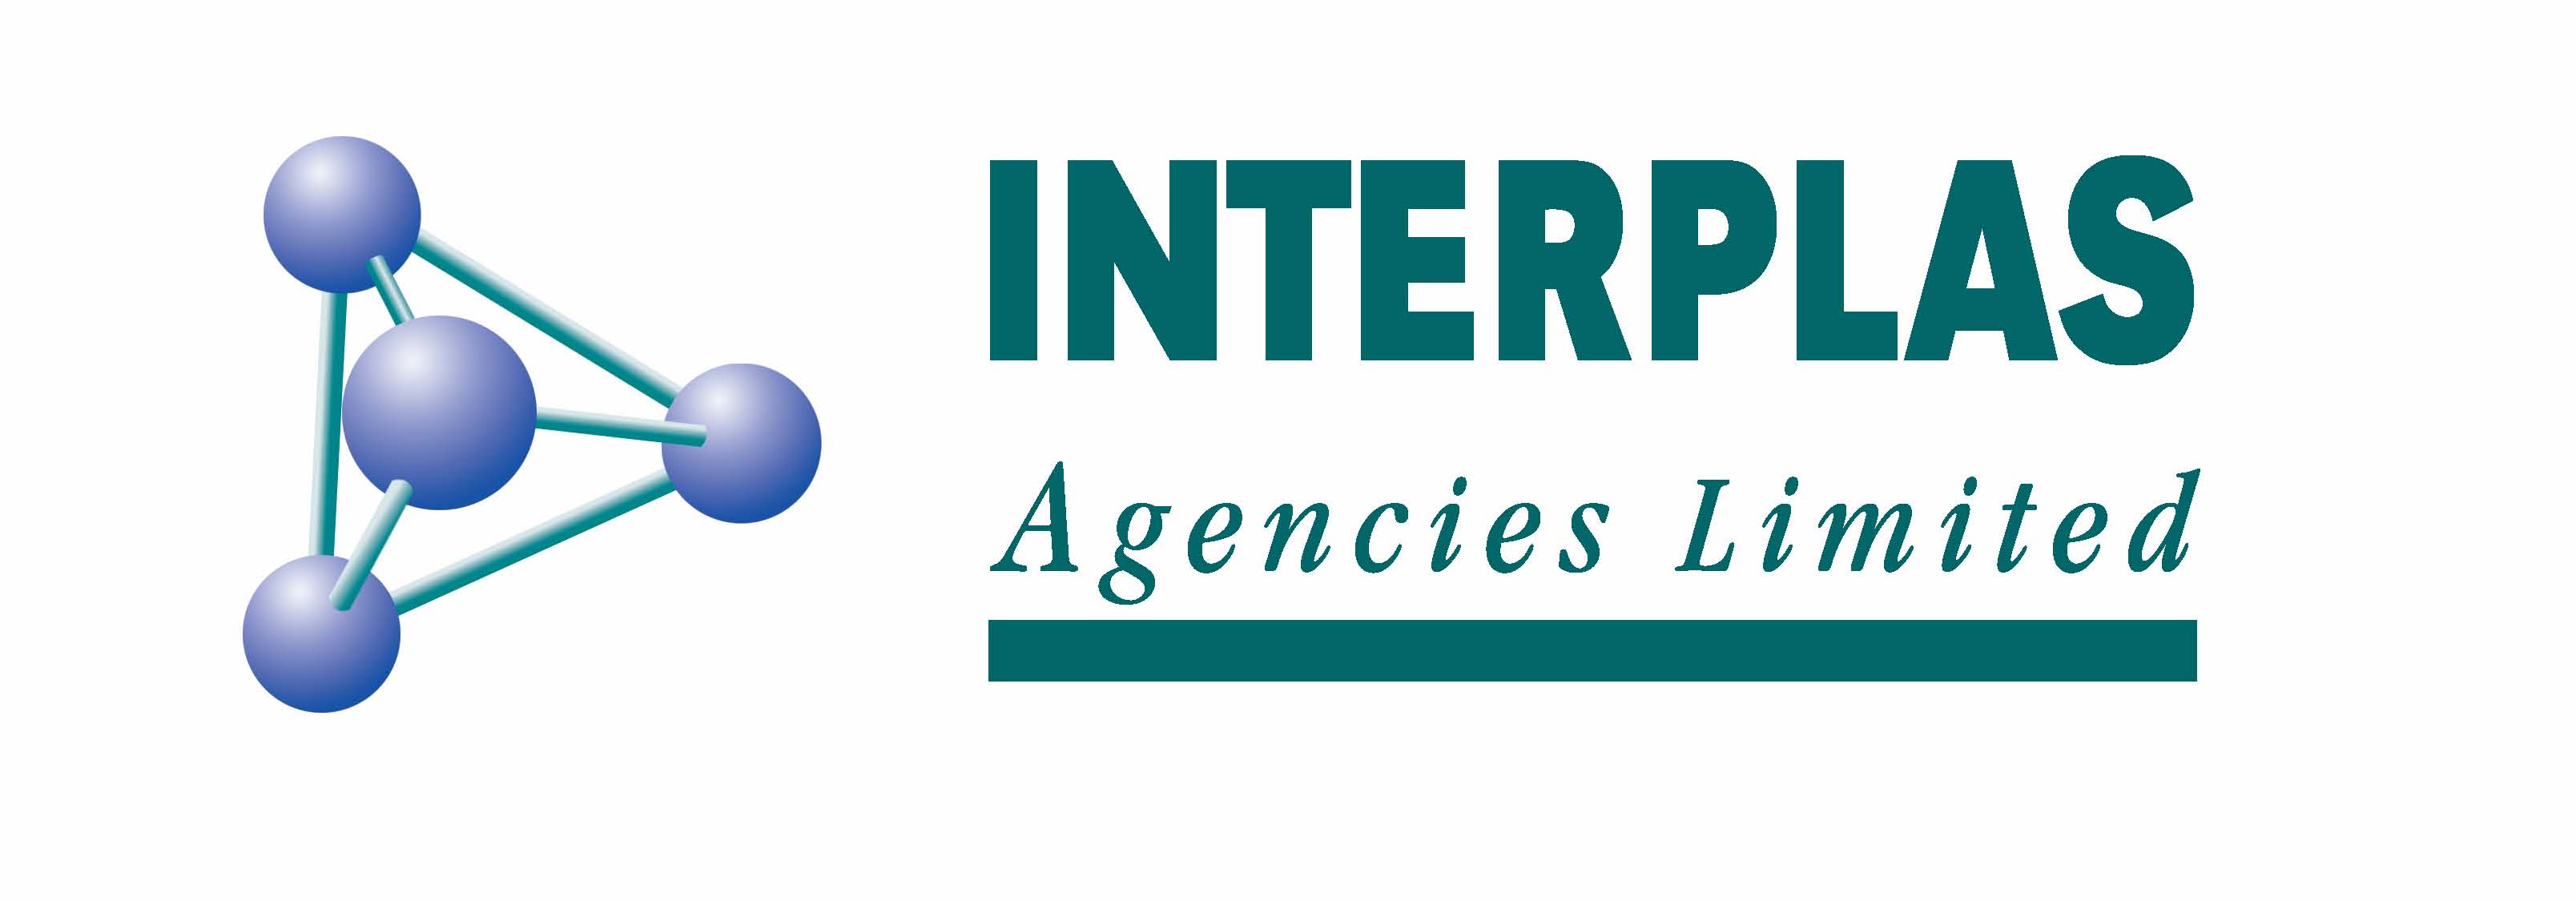 Interplas new logo